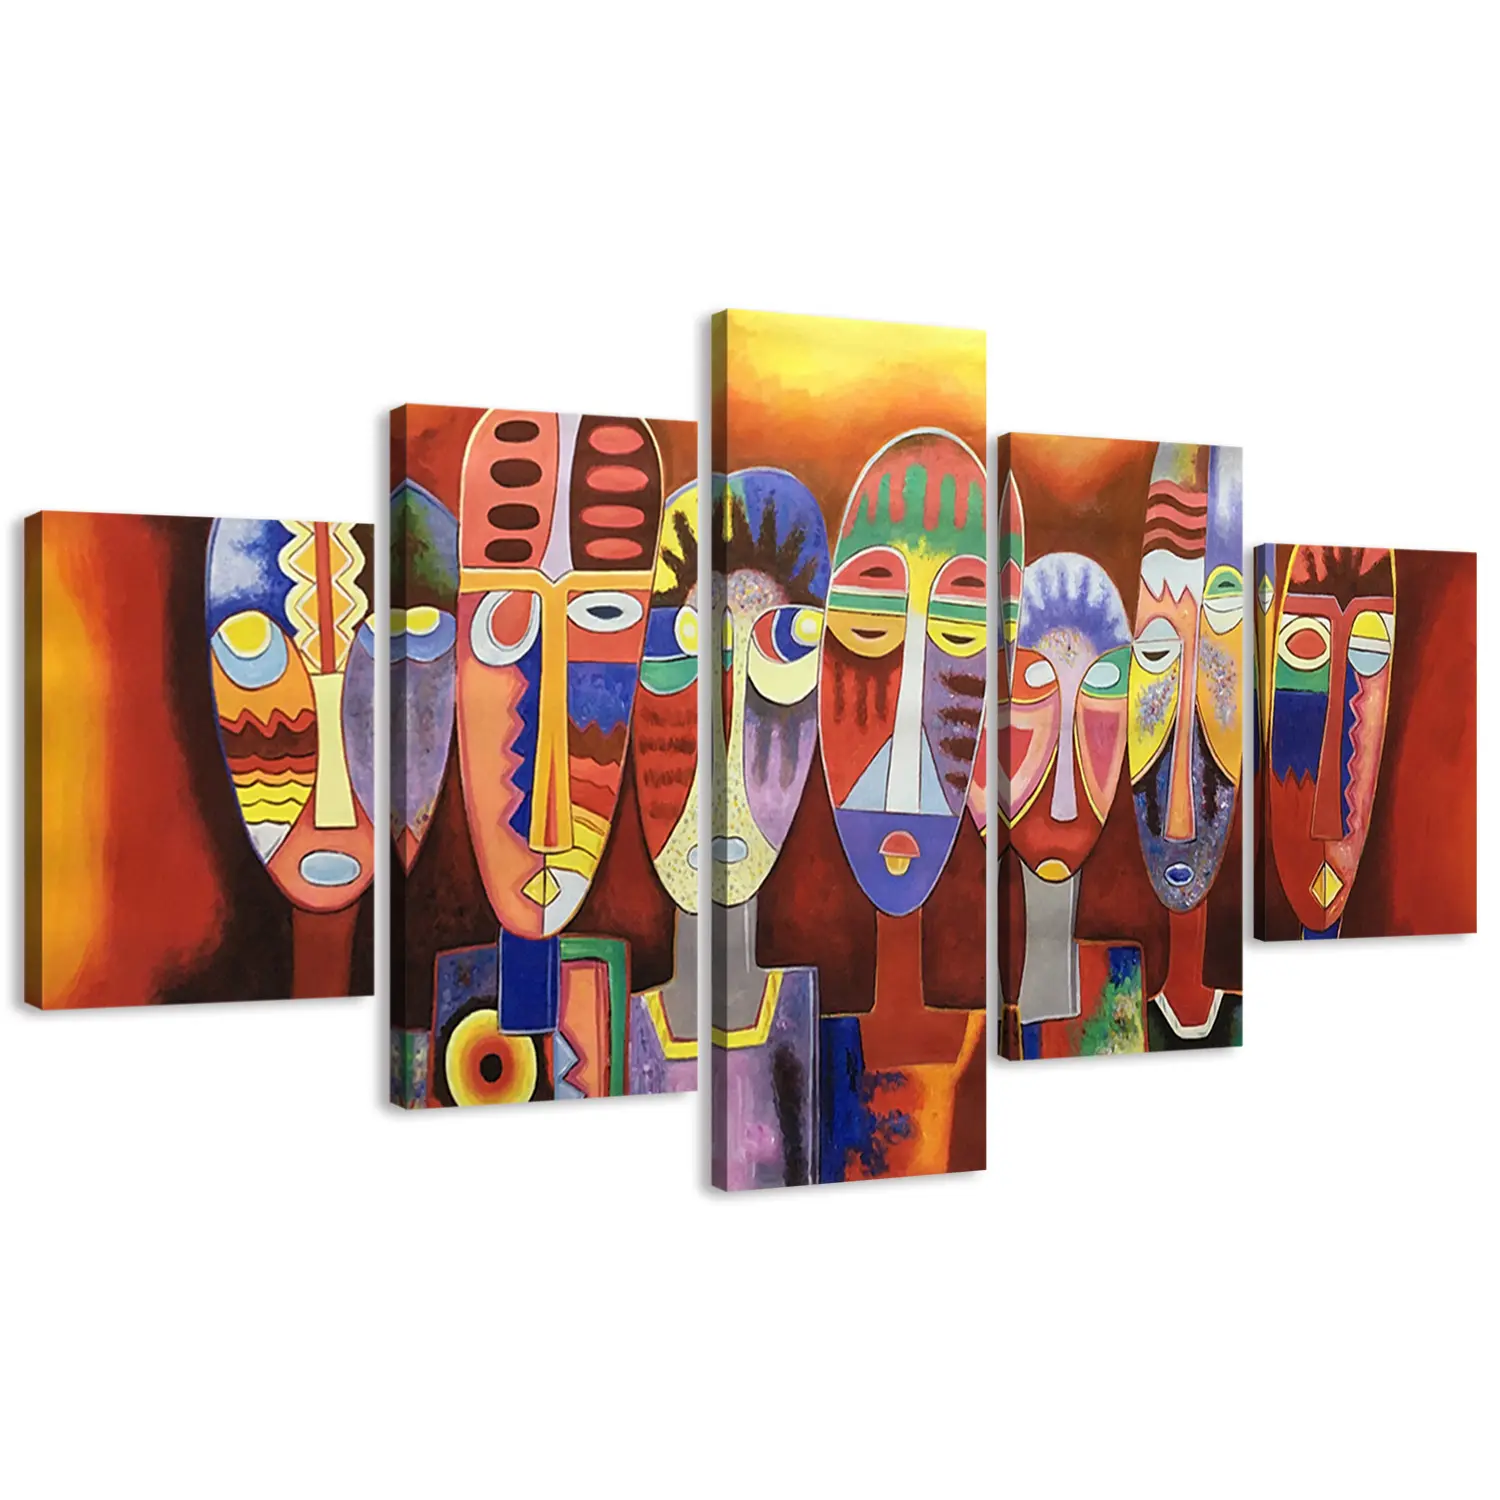 Totem africano a tema pittura decorazione parete cinque pannelli antichi dipinti di arte per la casa